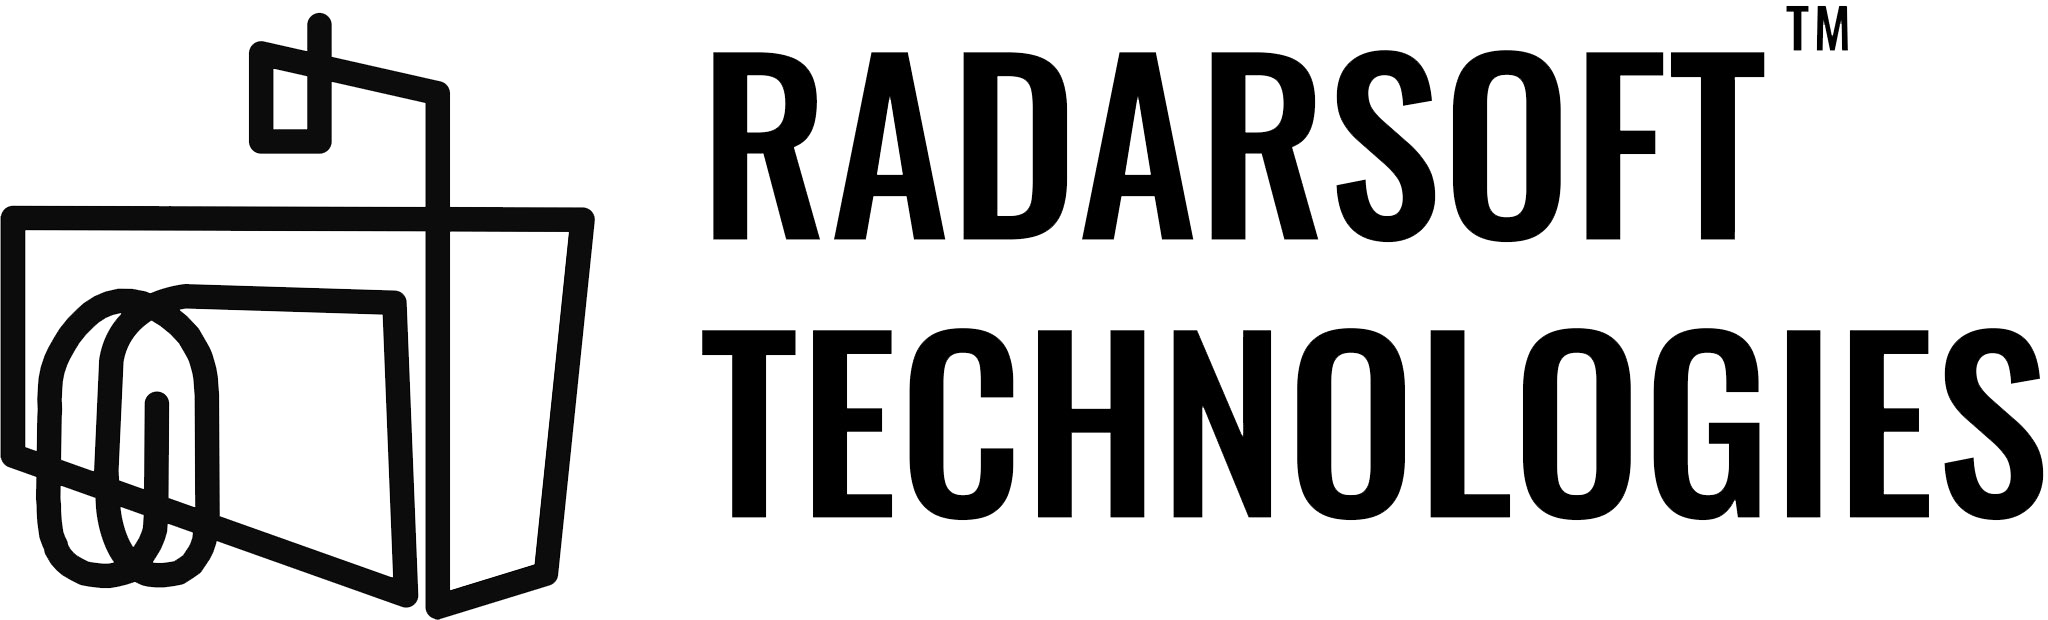 RadarSoft Tech